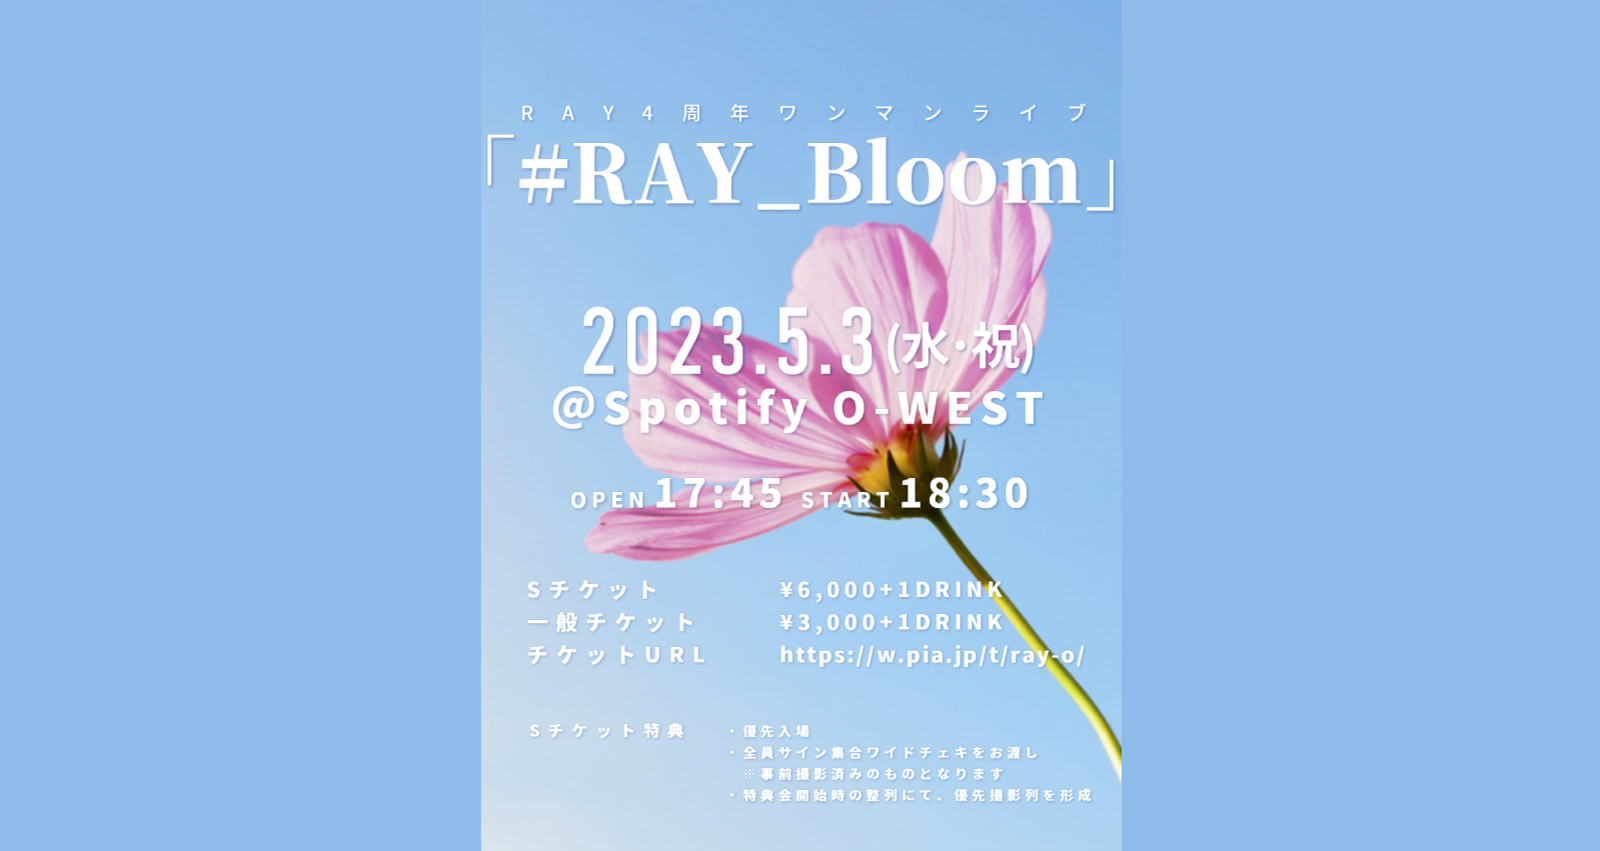 RAY4周年ワンマンライブ「#RAY_Bloom」